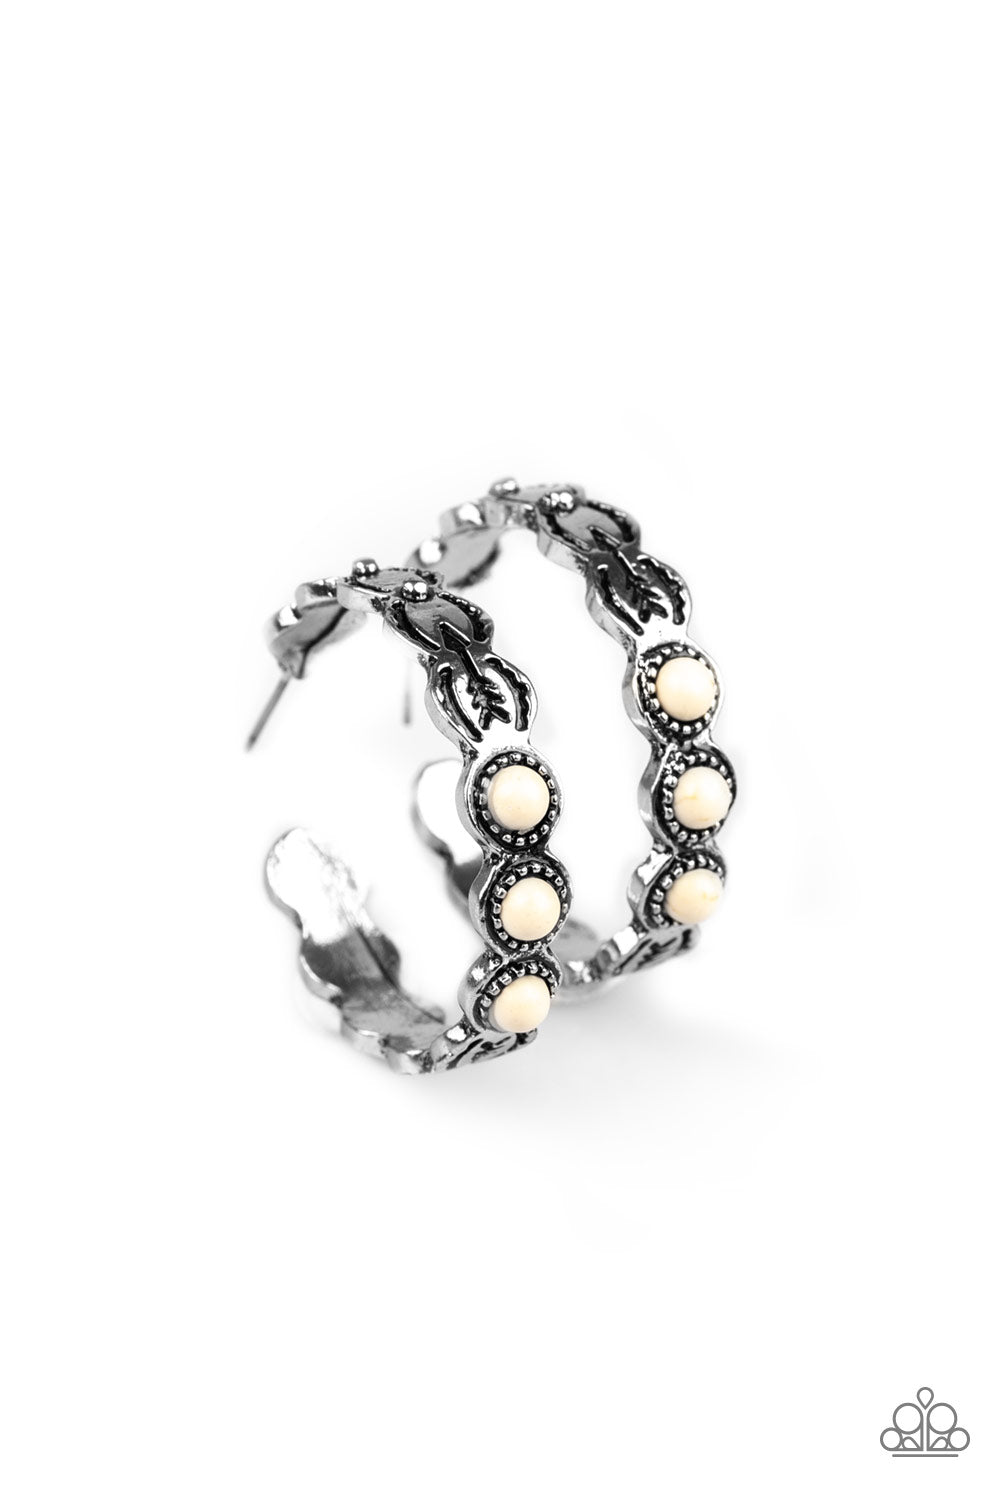 Paparazzi Anasazi Arrow - White Stone - Silver Hoop Earrings - $5 Jewelry With Ashley Swint